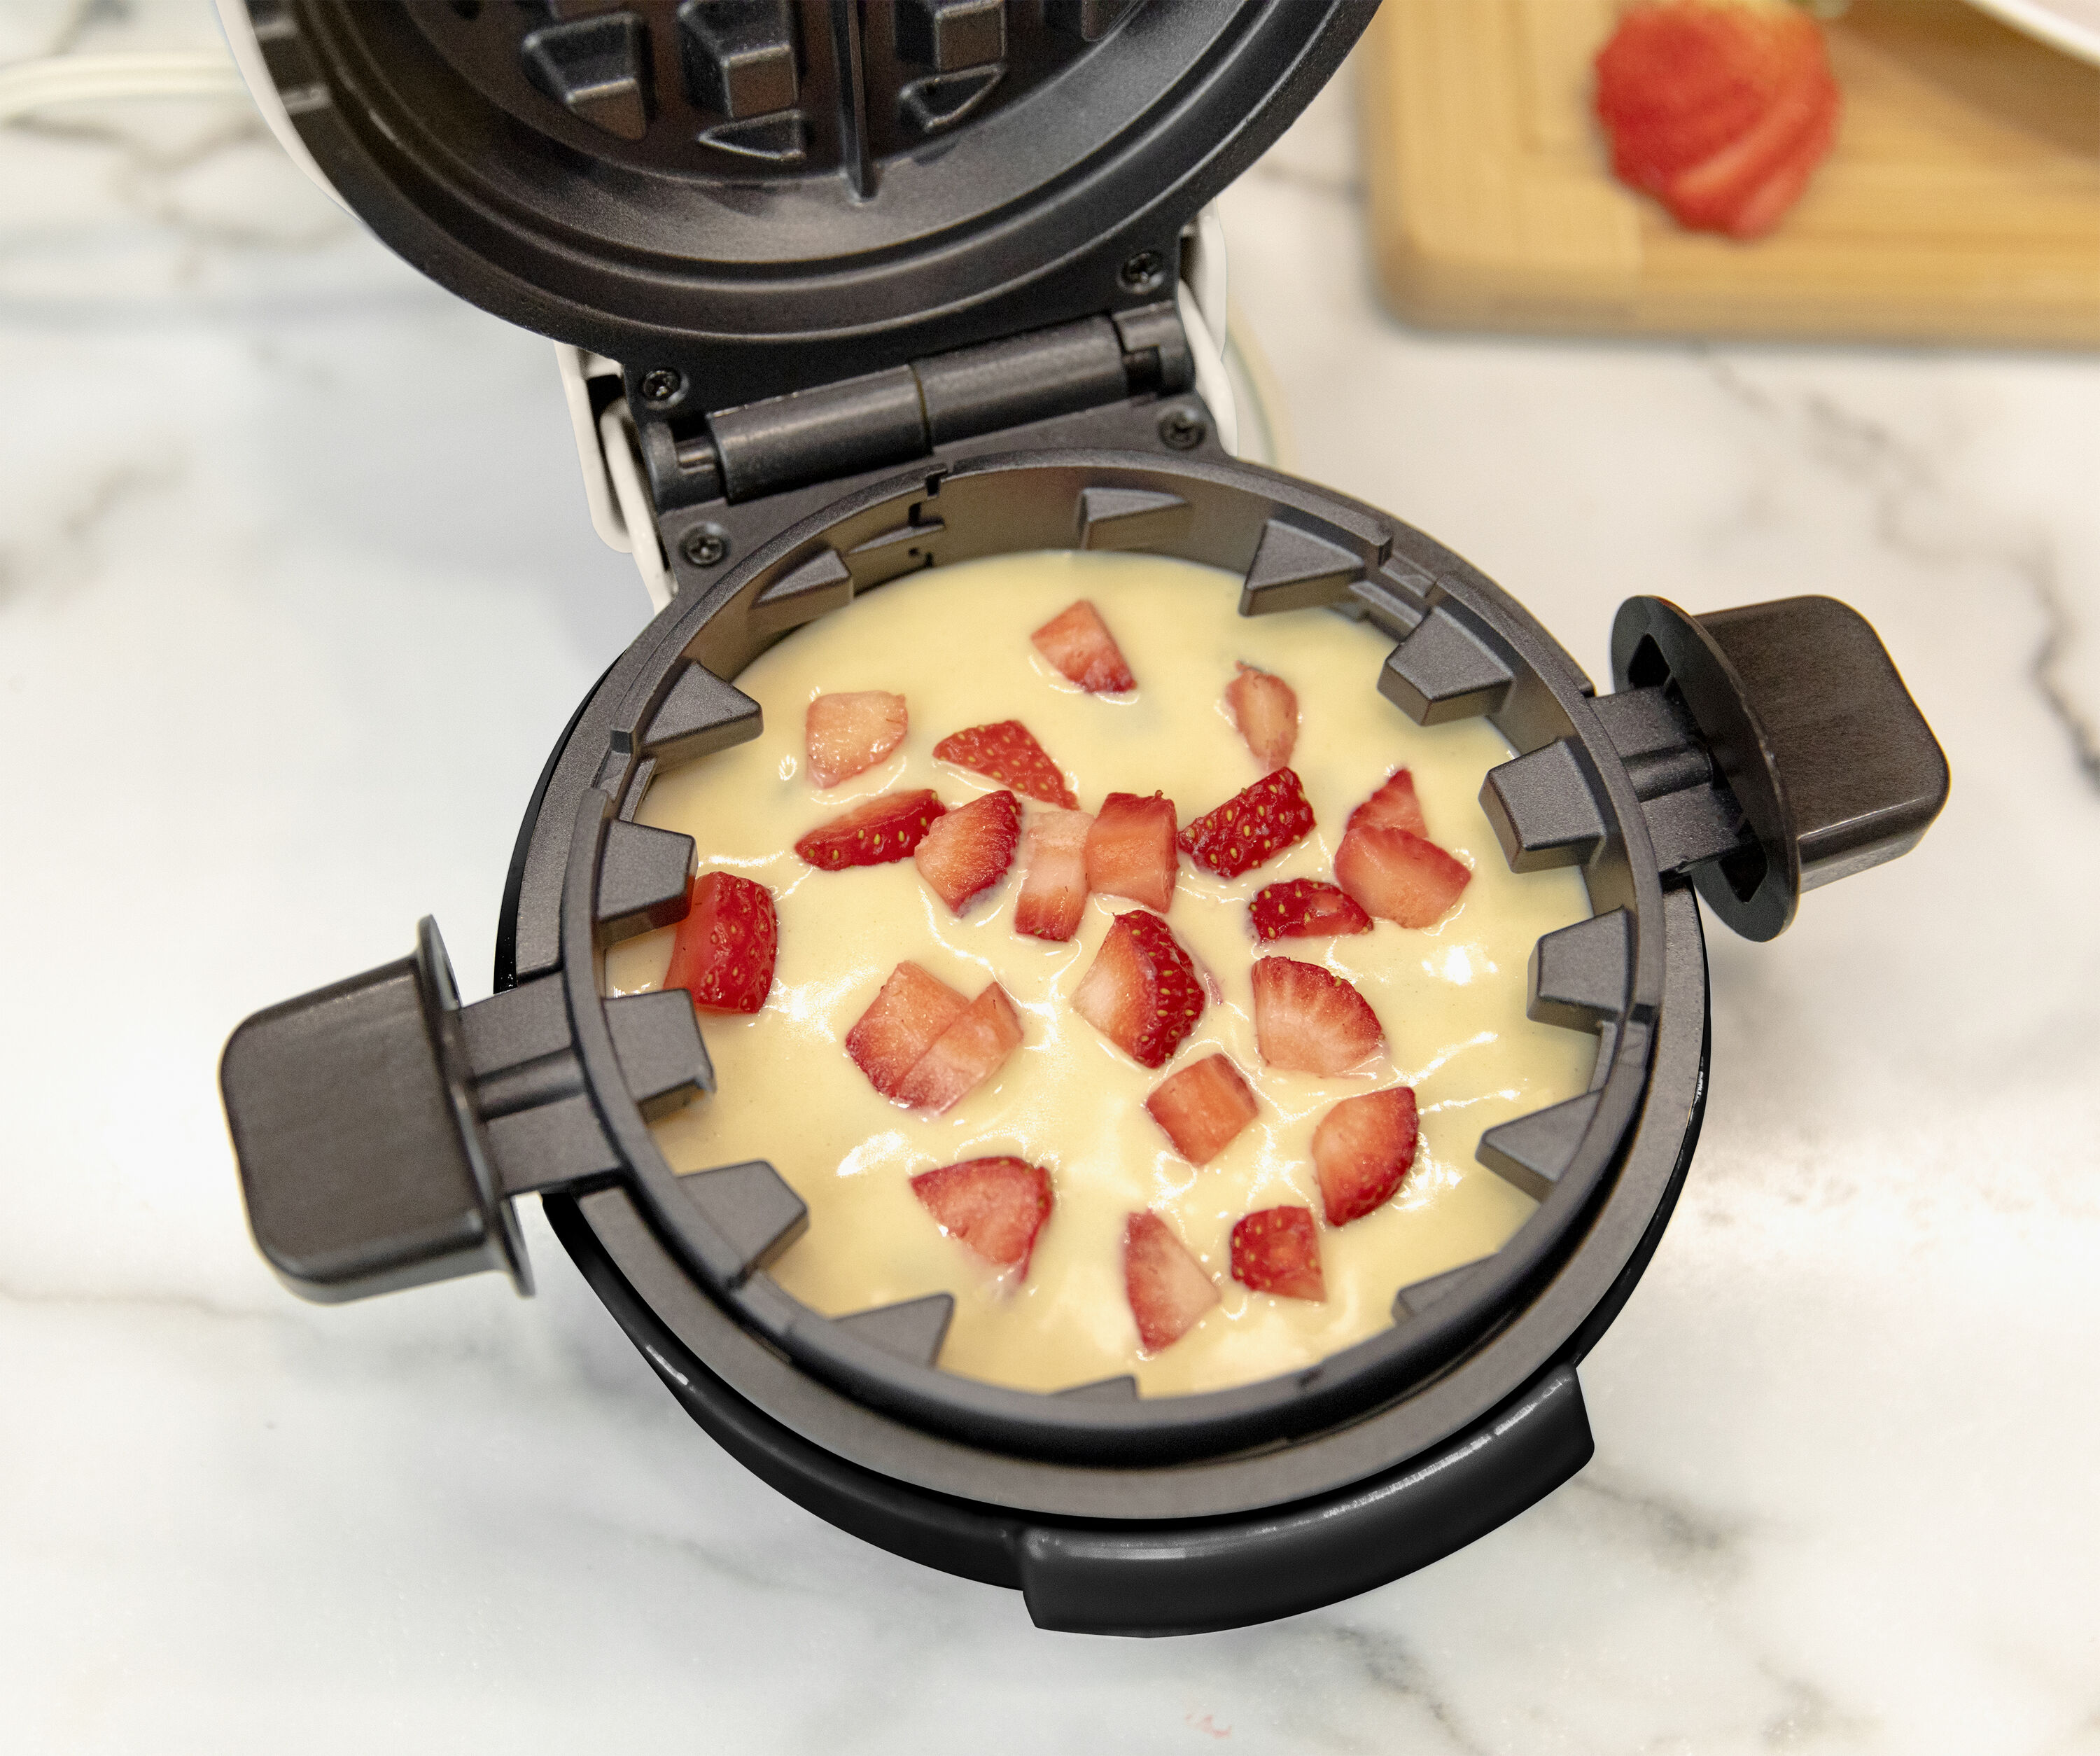 Nostalgia My Mini Waffle Maker 5 Cooking Surface White Beige NEW